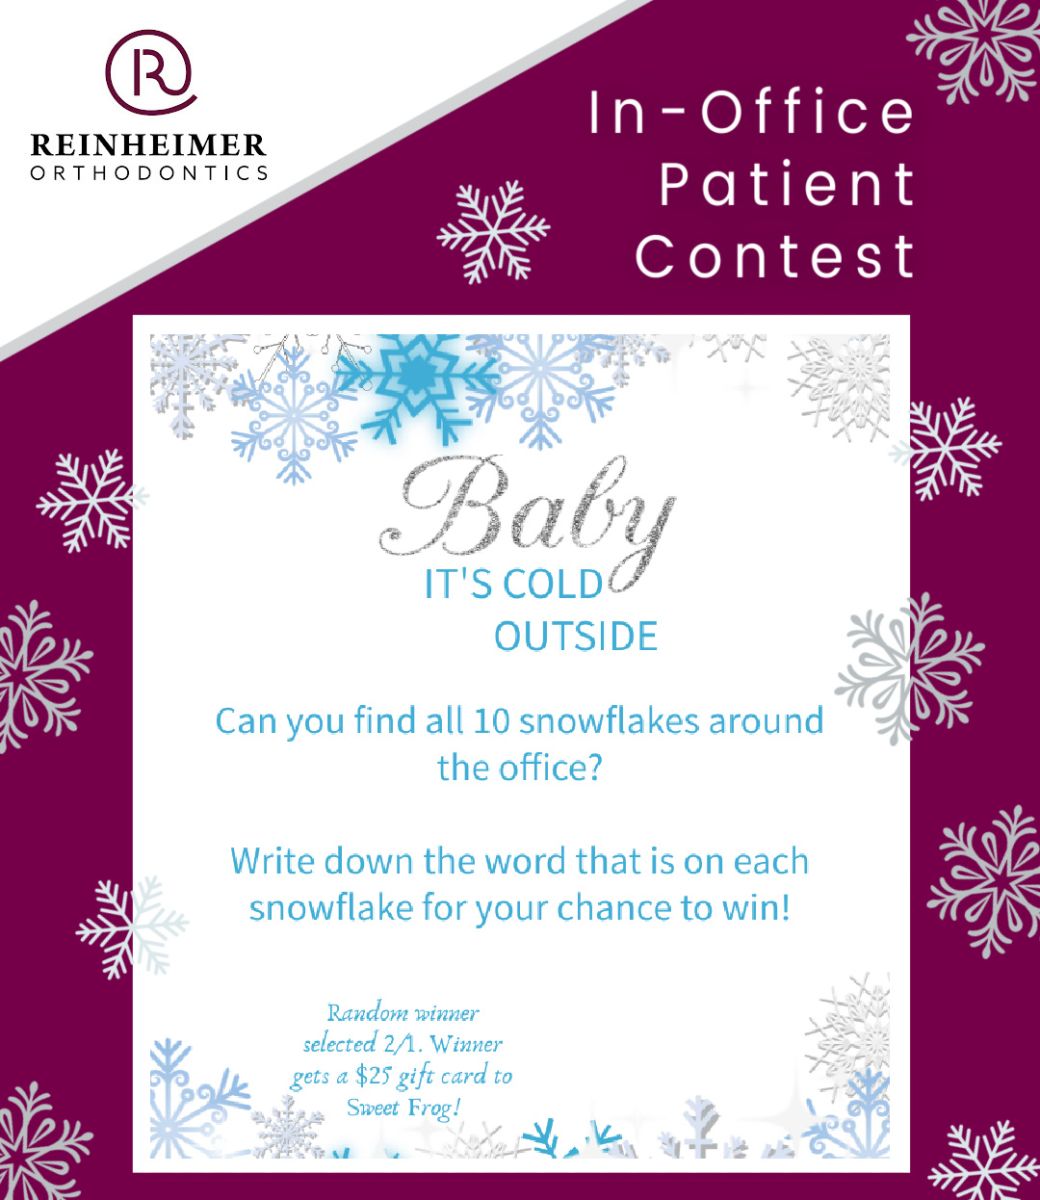 January Contest at Reinheimer Orthodontics